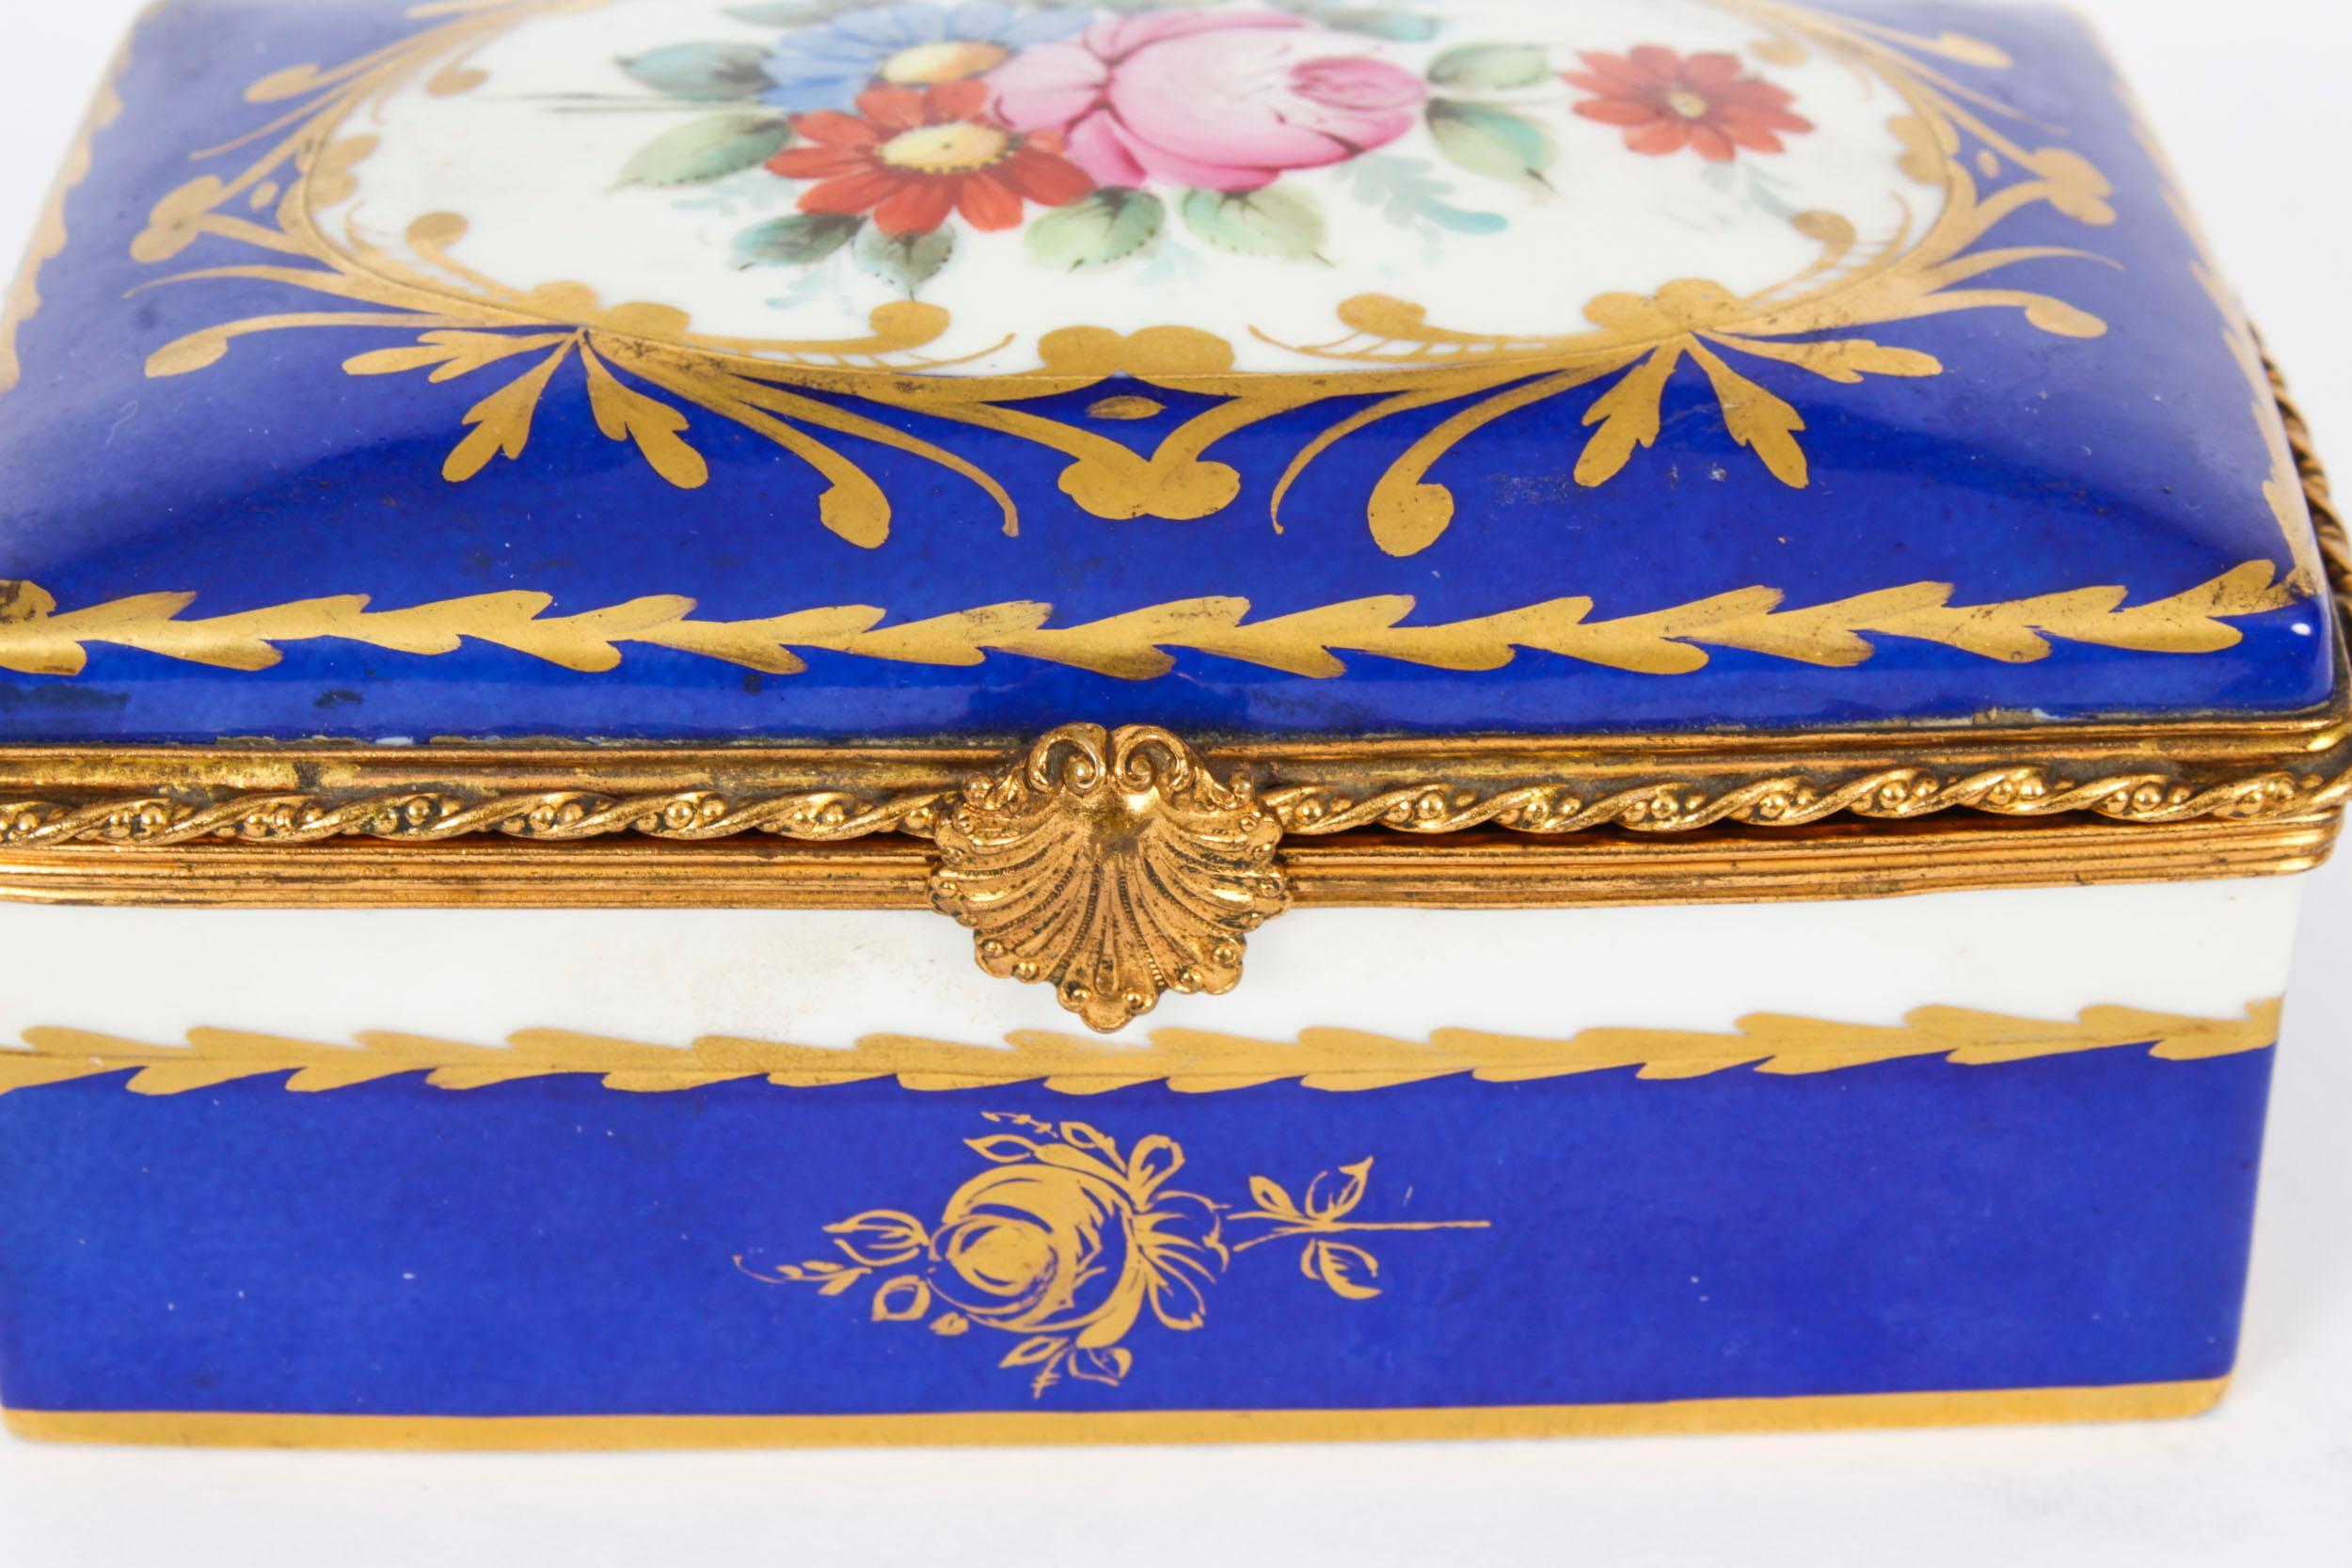 Antique Limoges Royal Blue Ormolu Mounted Casket Box 19h Century For Sale 3